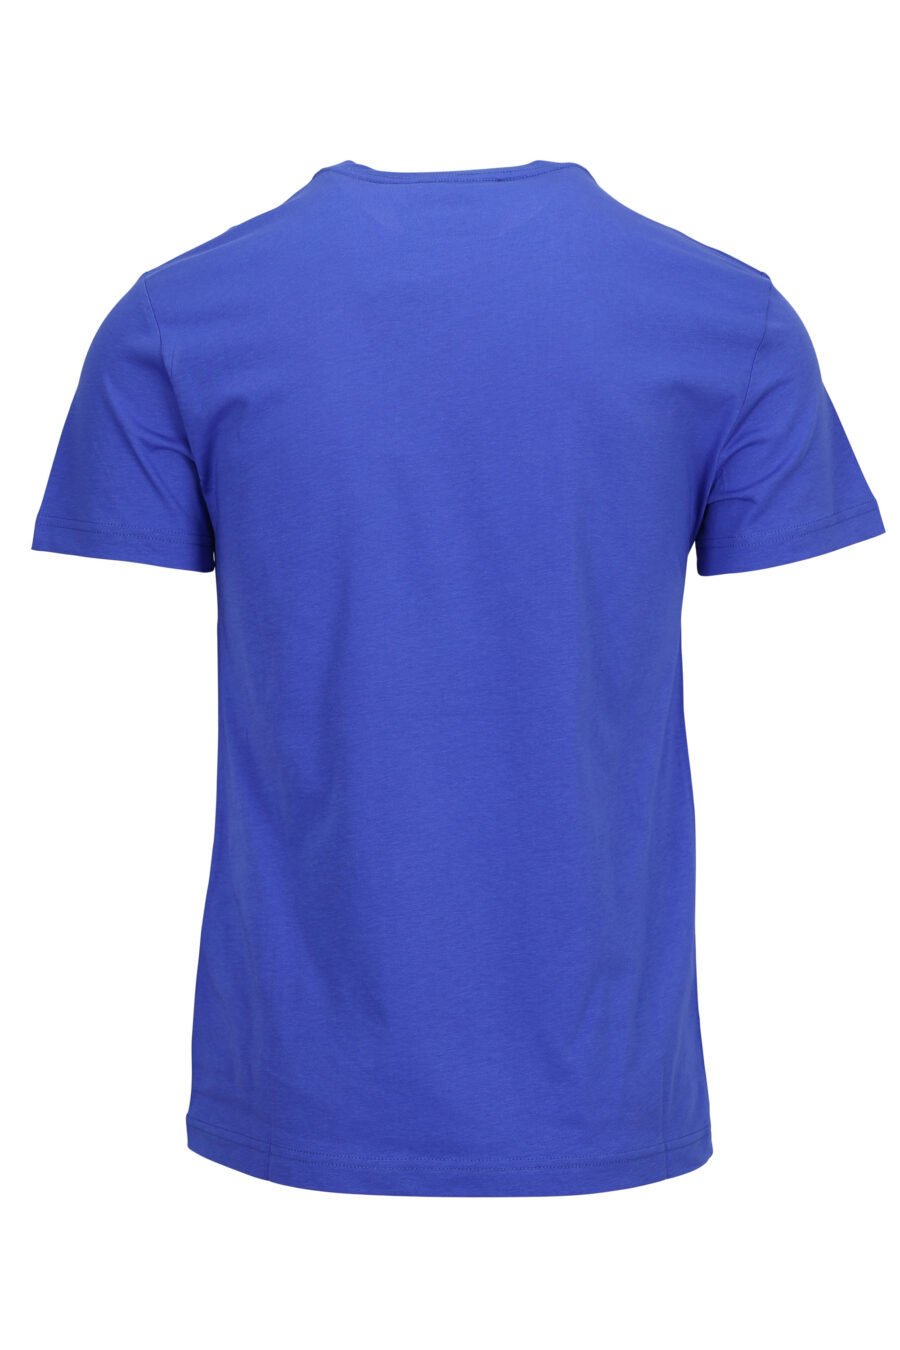 Blaues T-Shirt mit goldglänzendem Maxilogo - 8052019580044 1